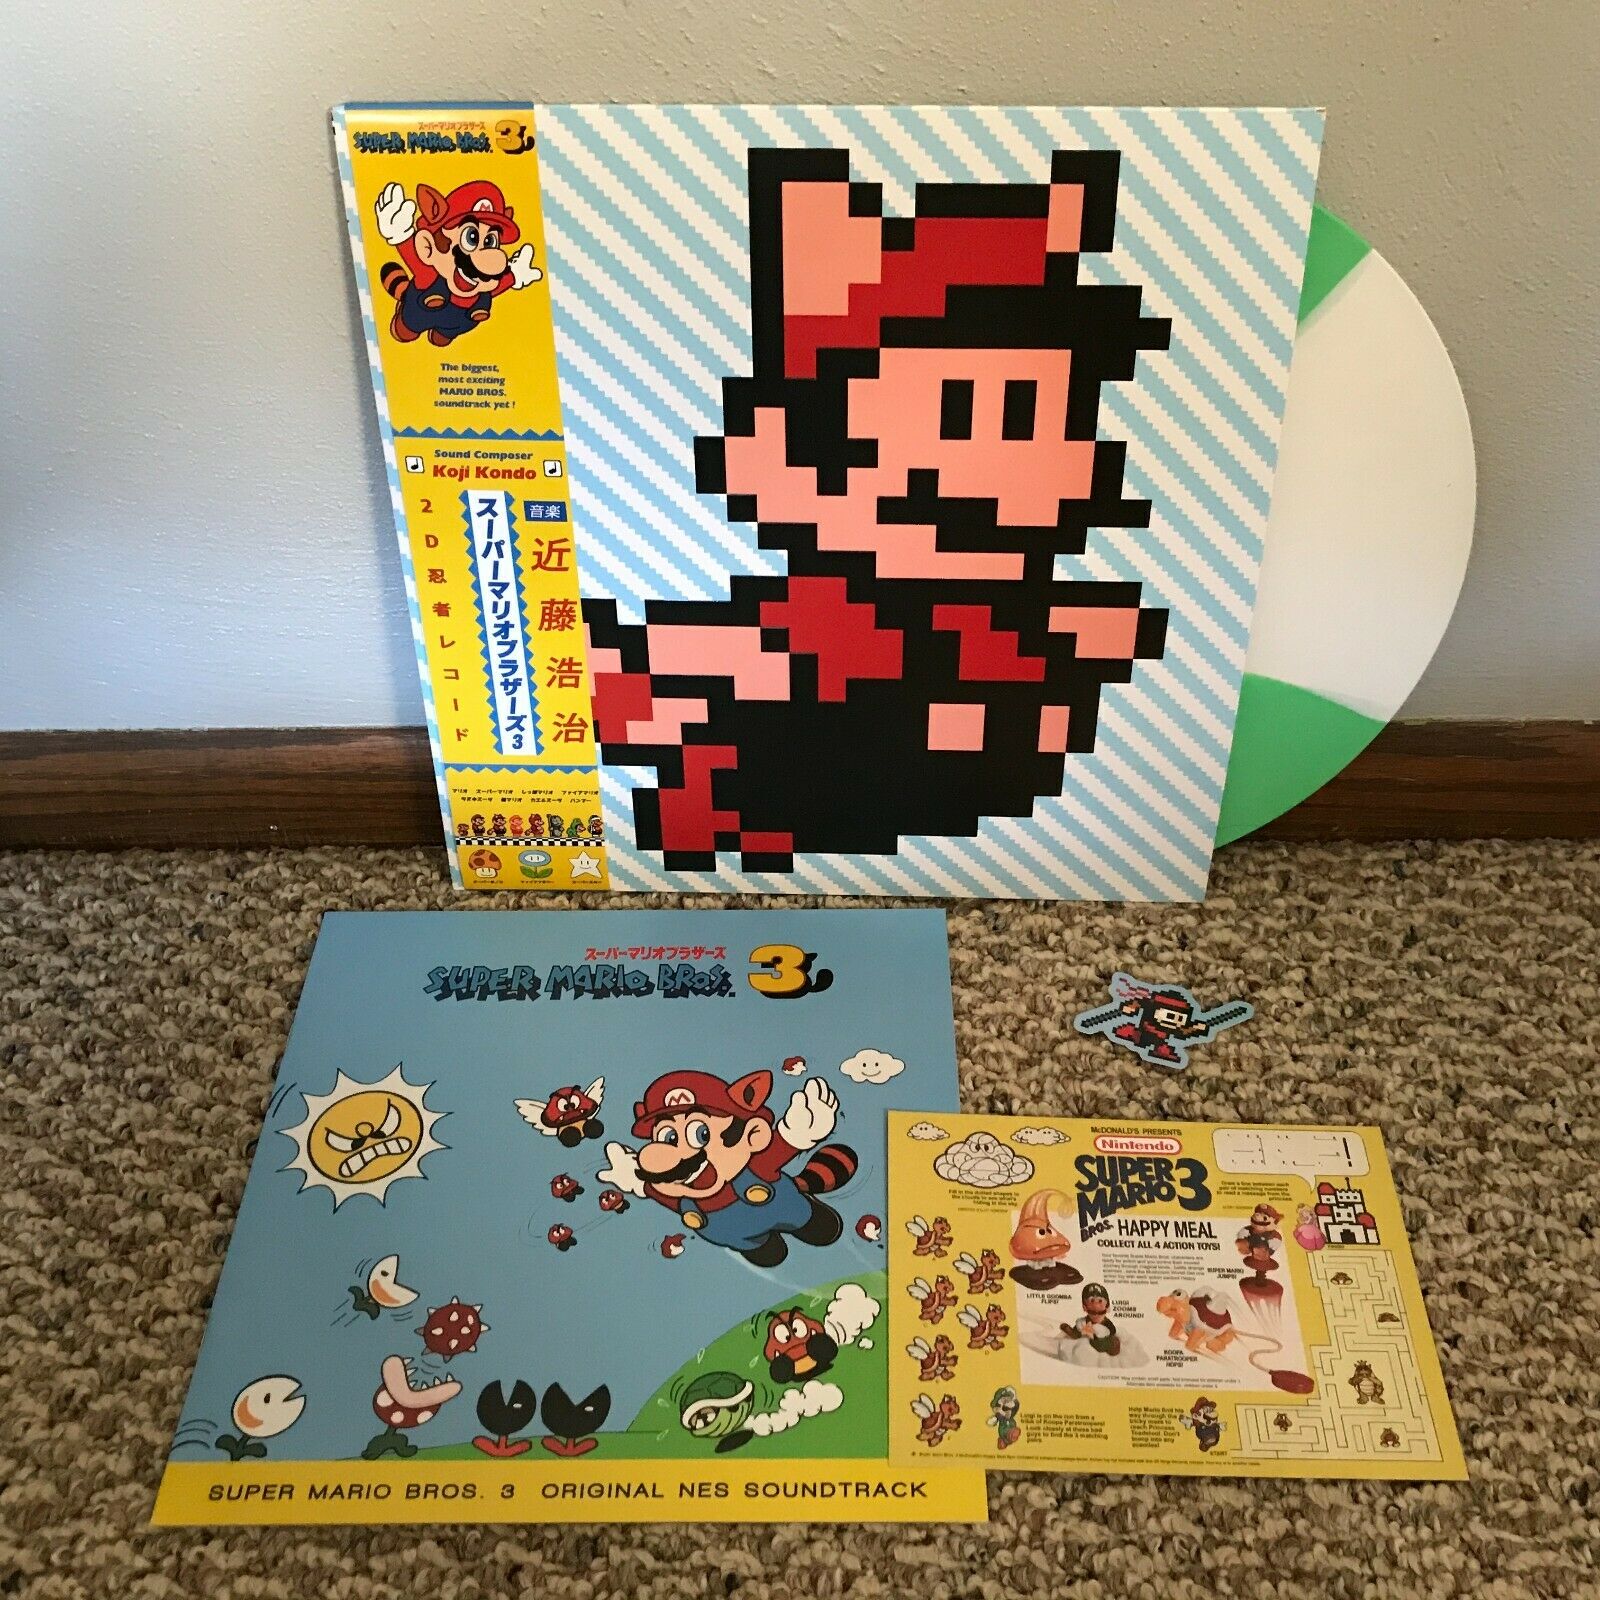 popsike.com - Super Mario Bros. 3 Soundtrack Vinyl Record Not 